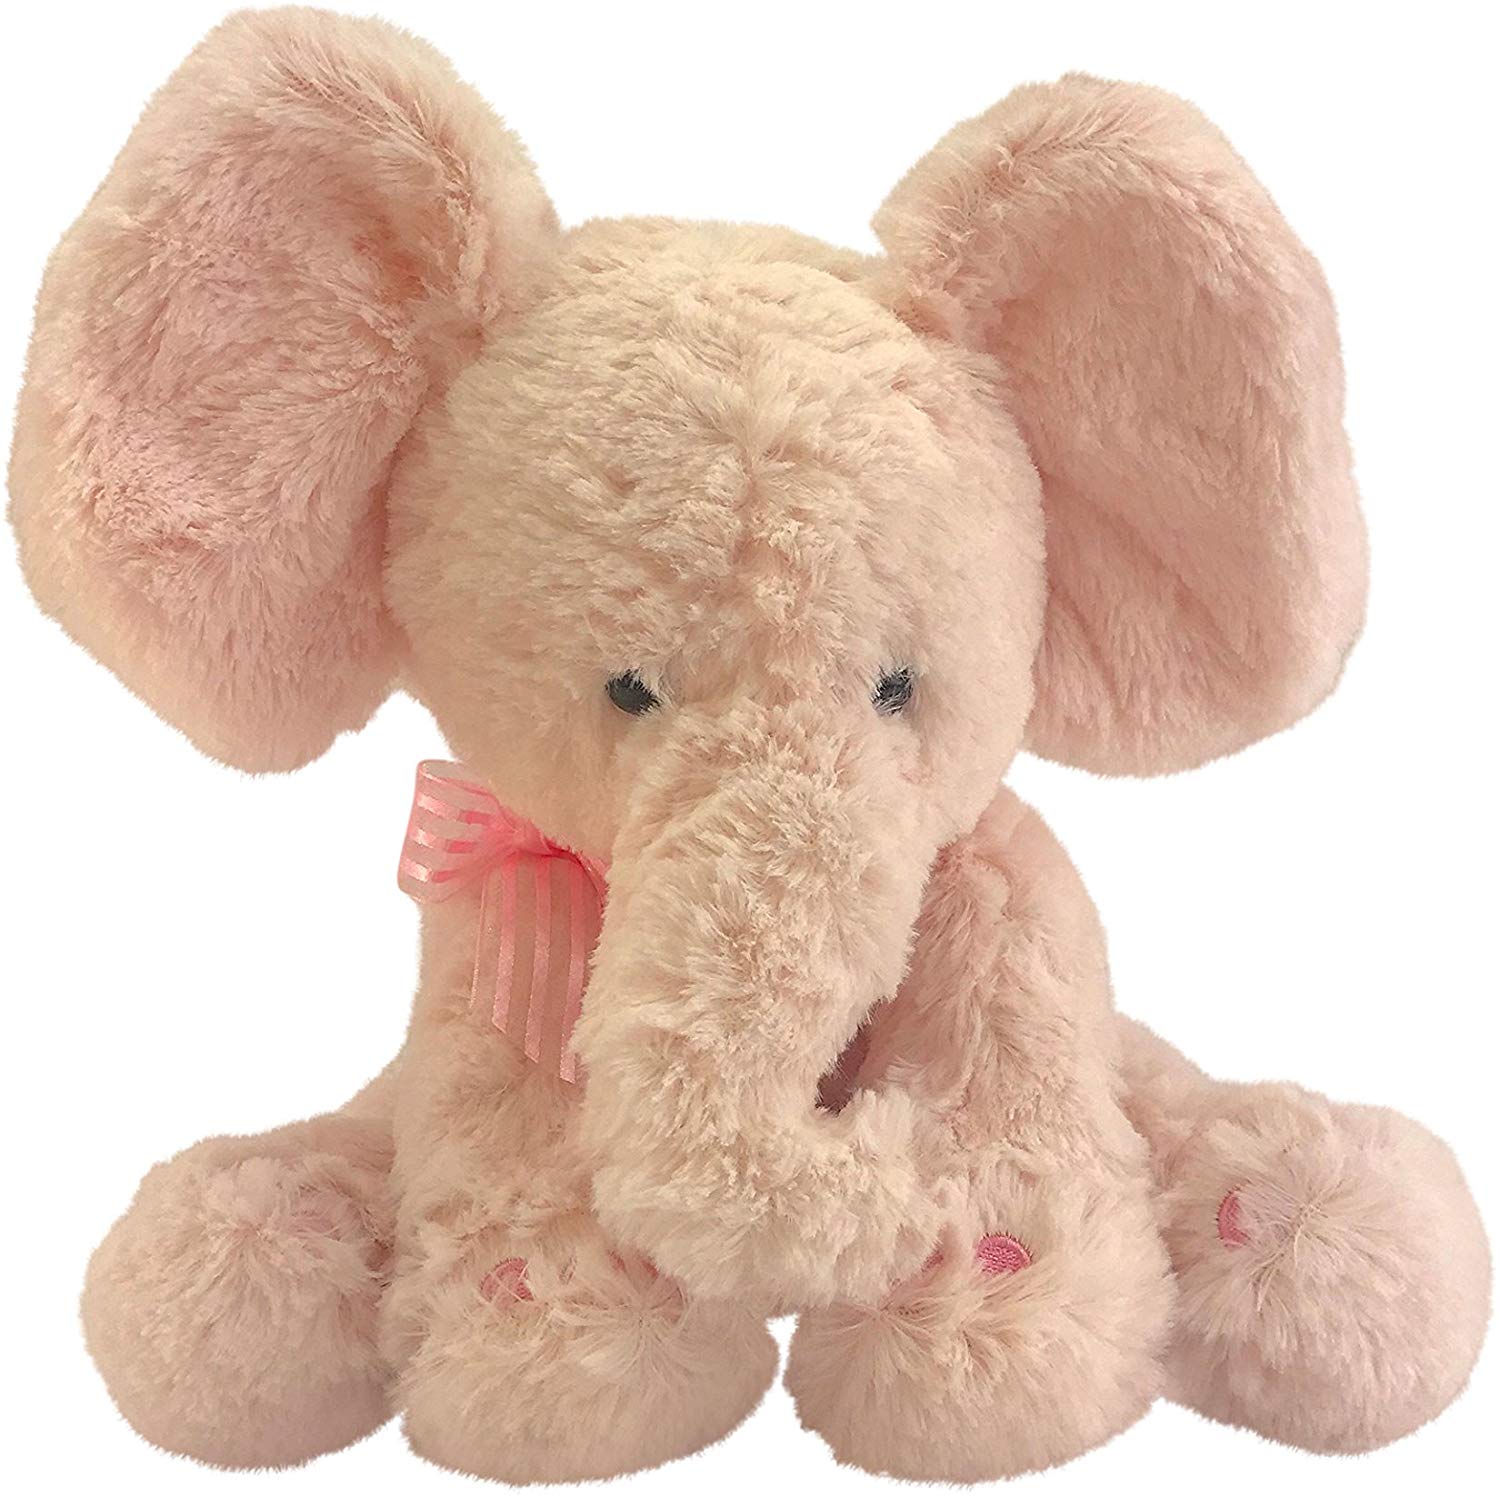 pink elephant teddy bear